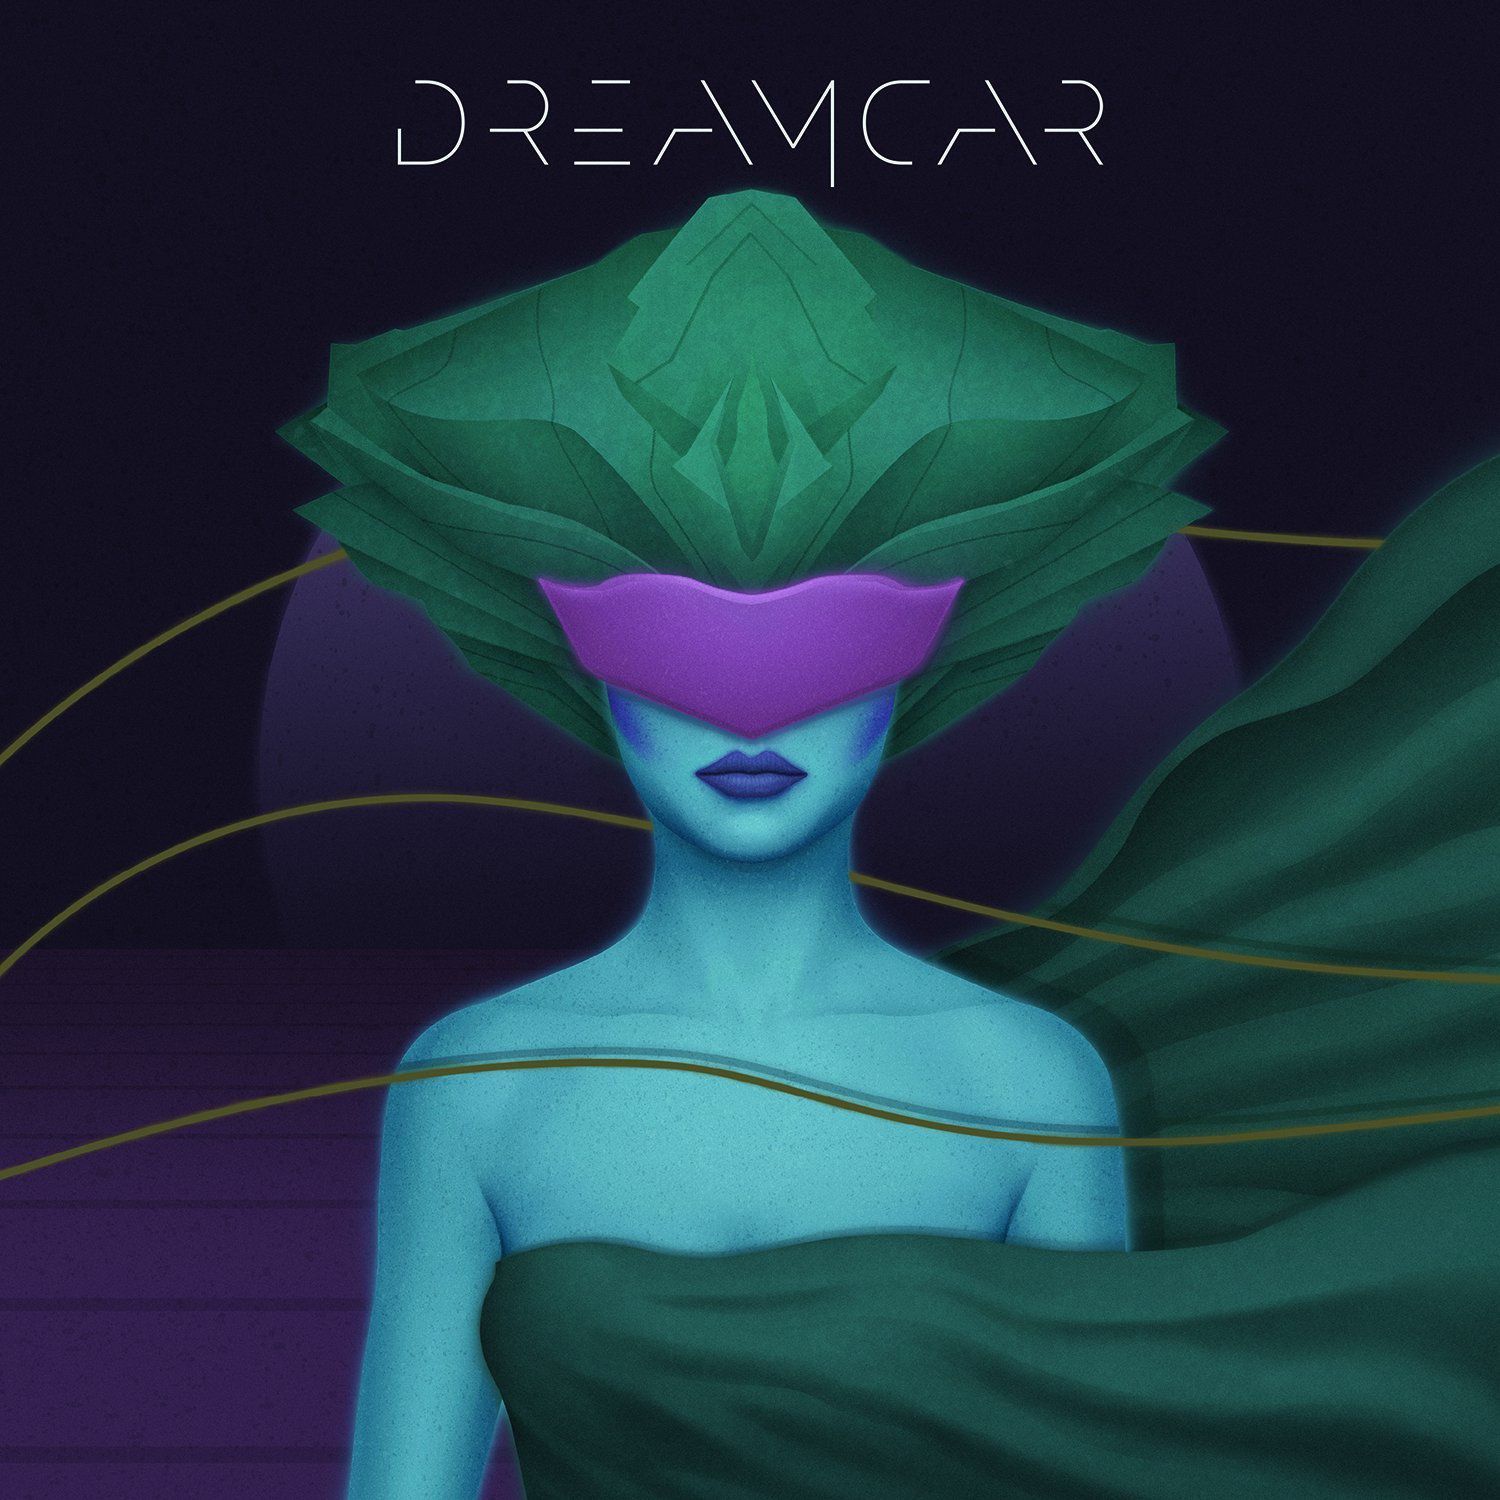 dreamcar album stream download mp3 listen new afi doubt No Doubt/AFI supergroup DREAMCAR release self titled debut album: Stream/download